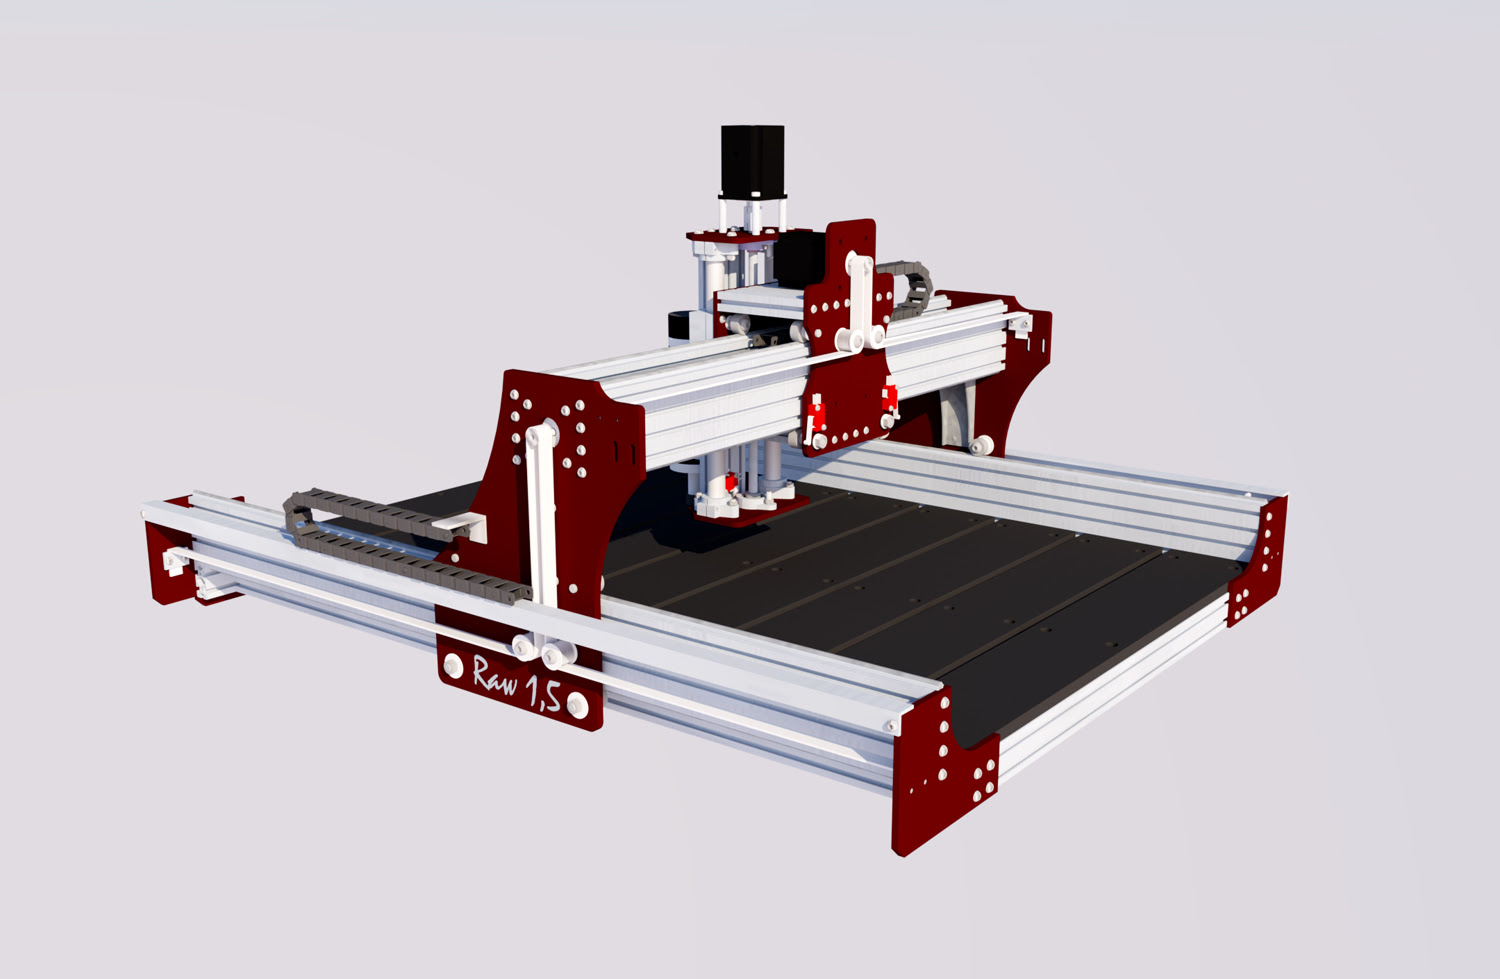 Чпу станок обучение с нуля. 5 Axis CNC Router Kit. 3018 Plus CNC engraving Machine. CNC DIY Kit. X-Carve CNC.